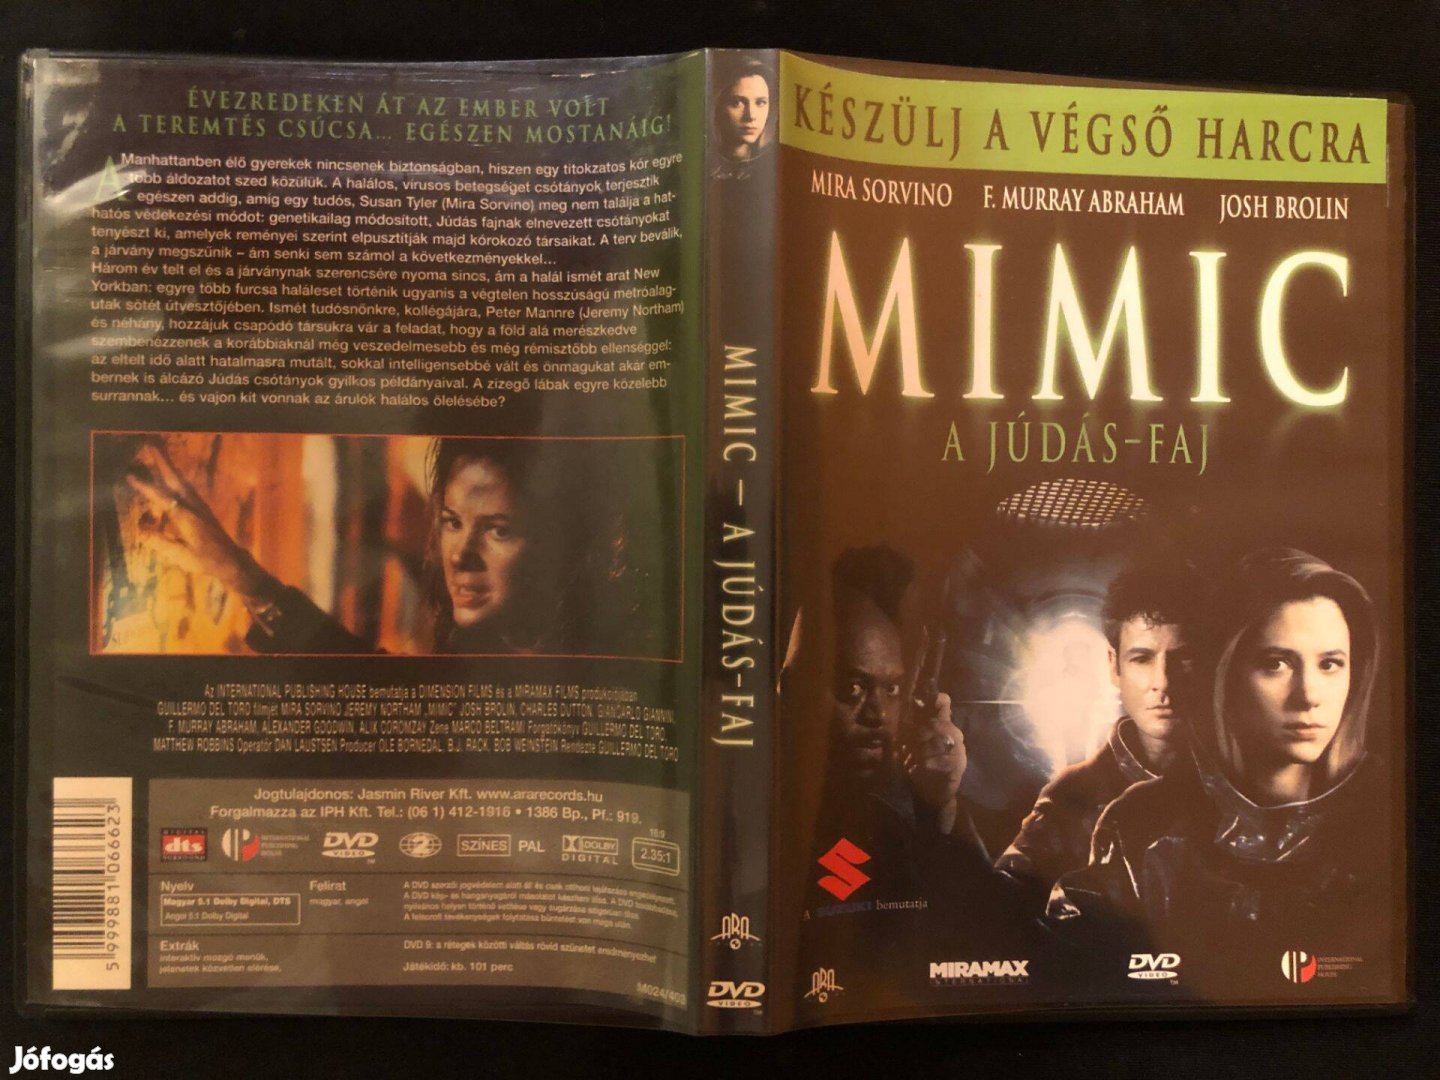 Mimic A Júdás-faj (karcmentes, Mira Sorvino, Josh Brolin) DVD